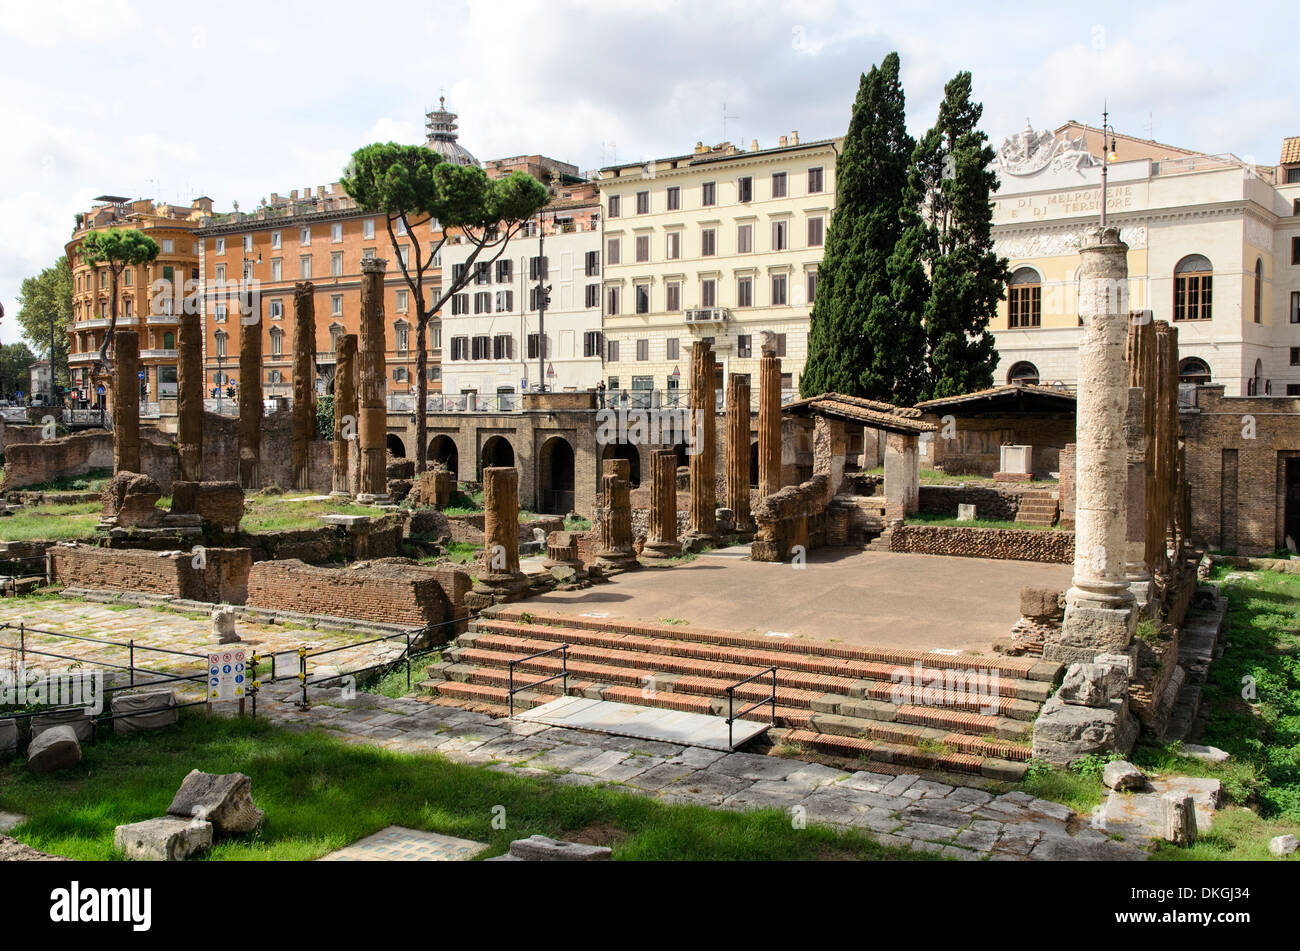 Temple of Juturna in Largo di Torre Argentina - Rome, Italy Stock Photo